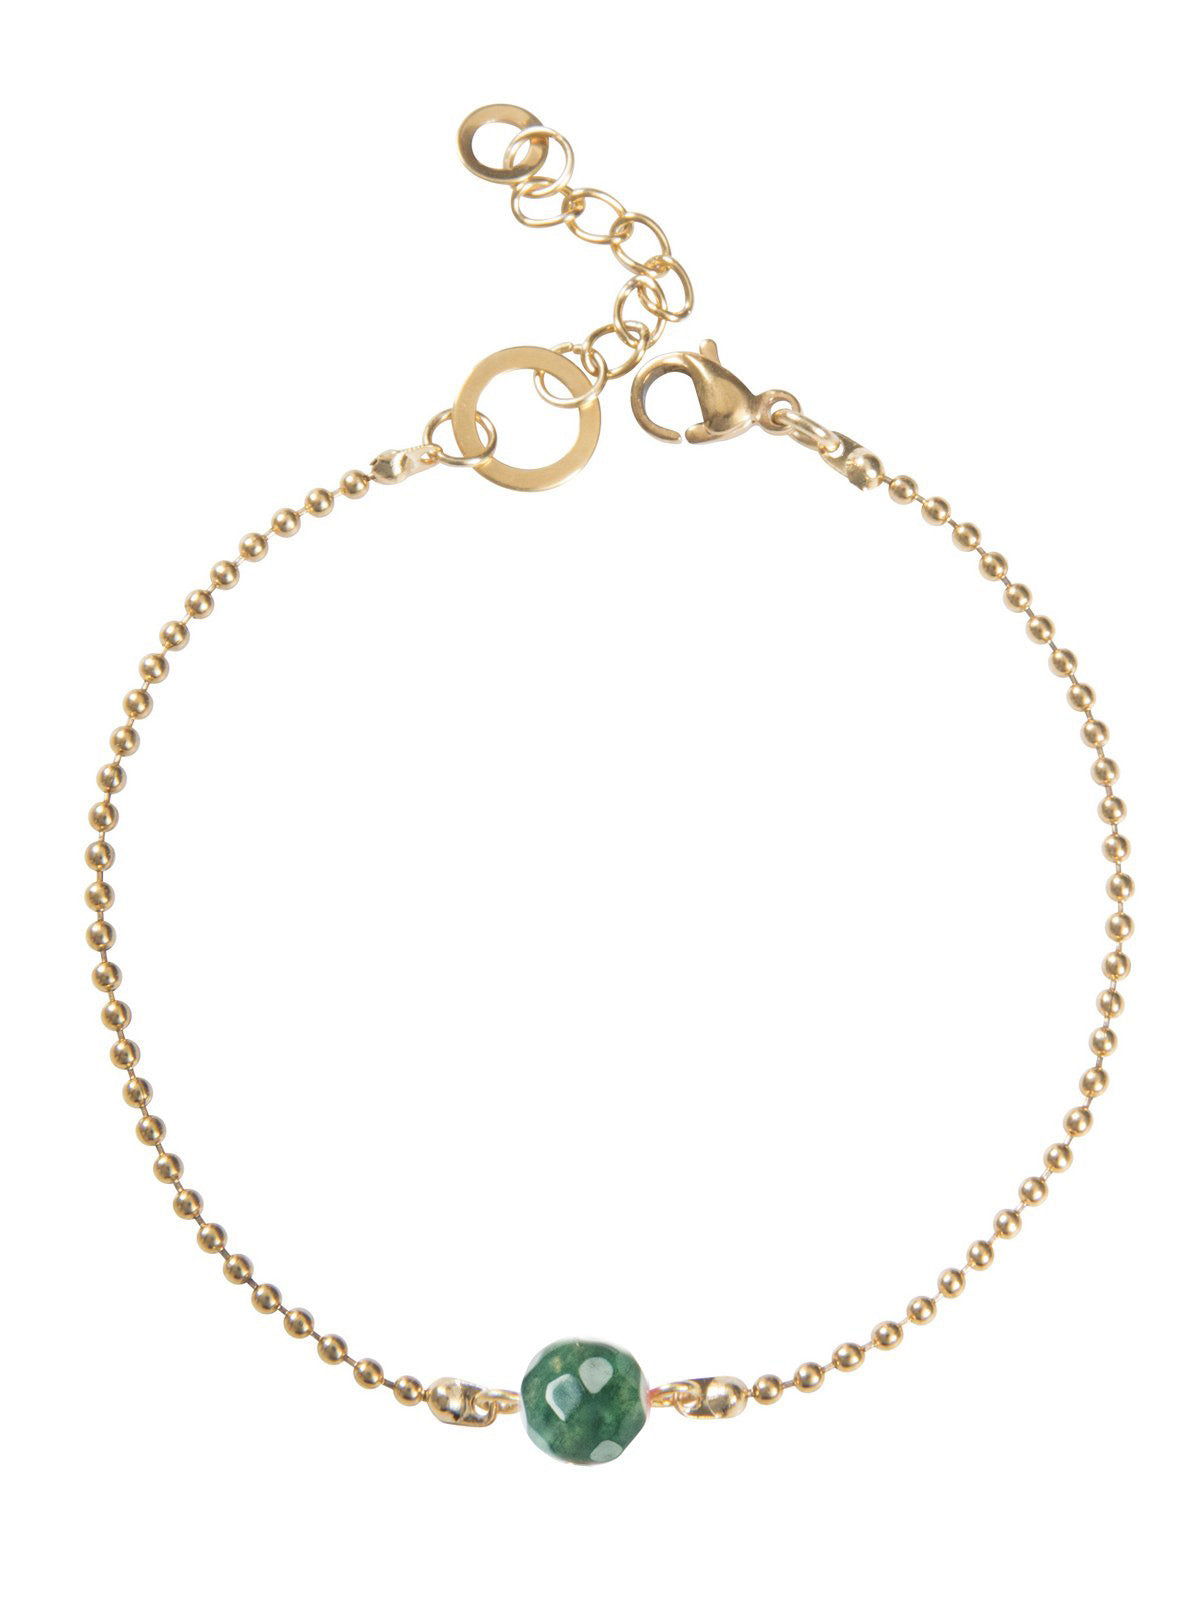 Gouden Armbandje met gemstone balletje army green - LEEF mode en accessoires